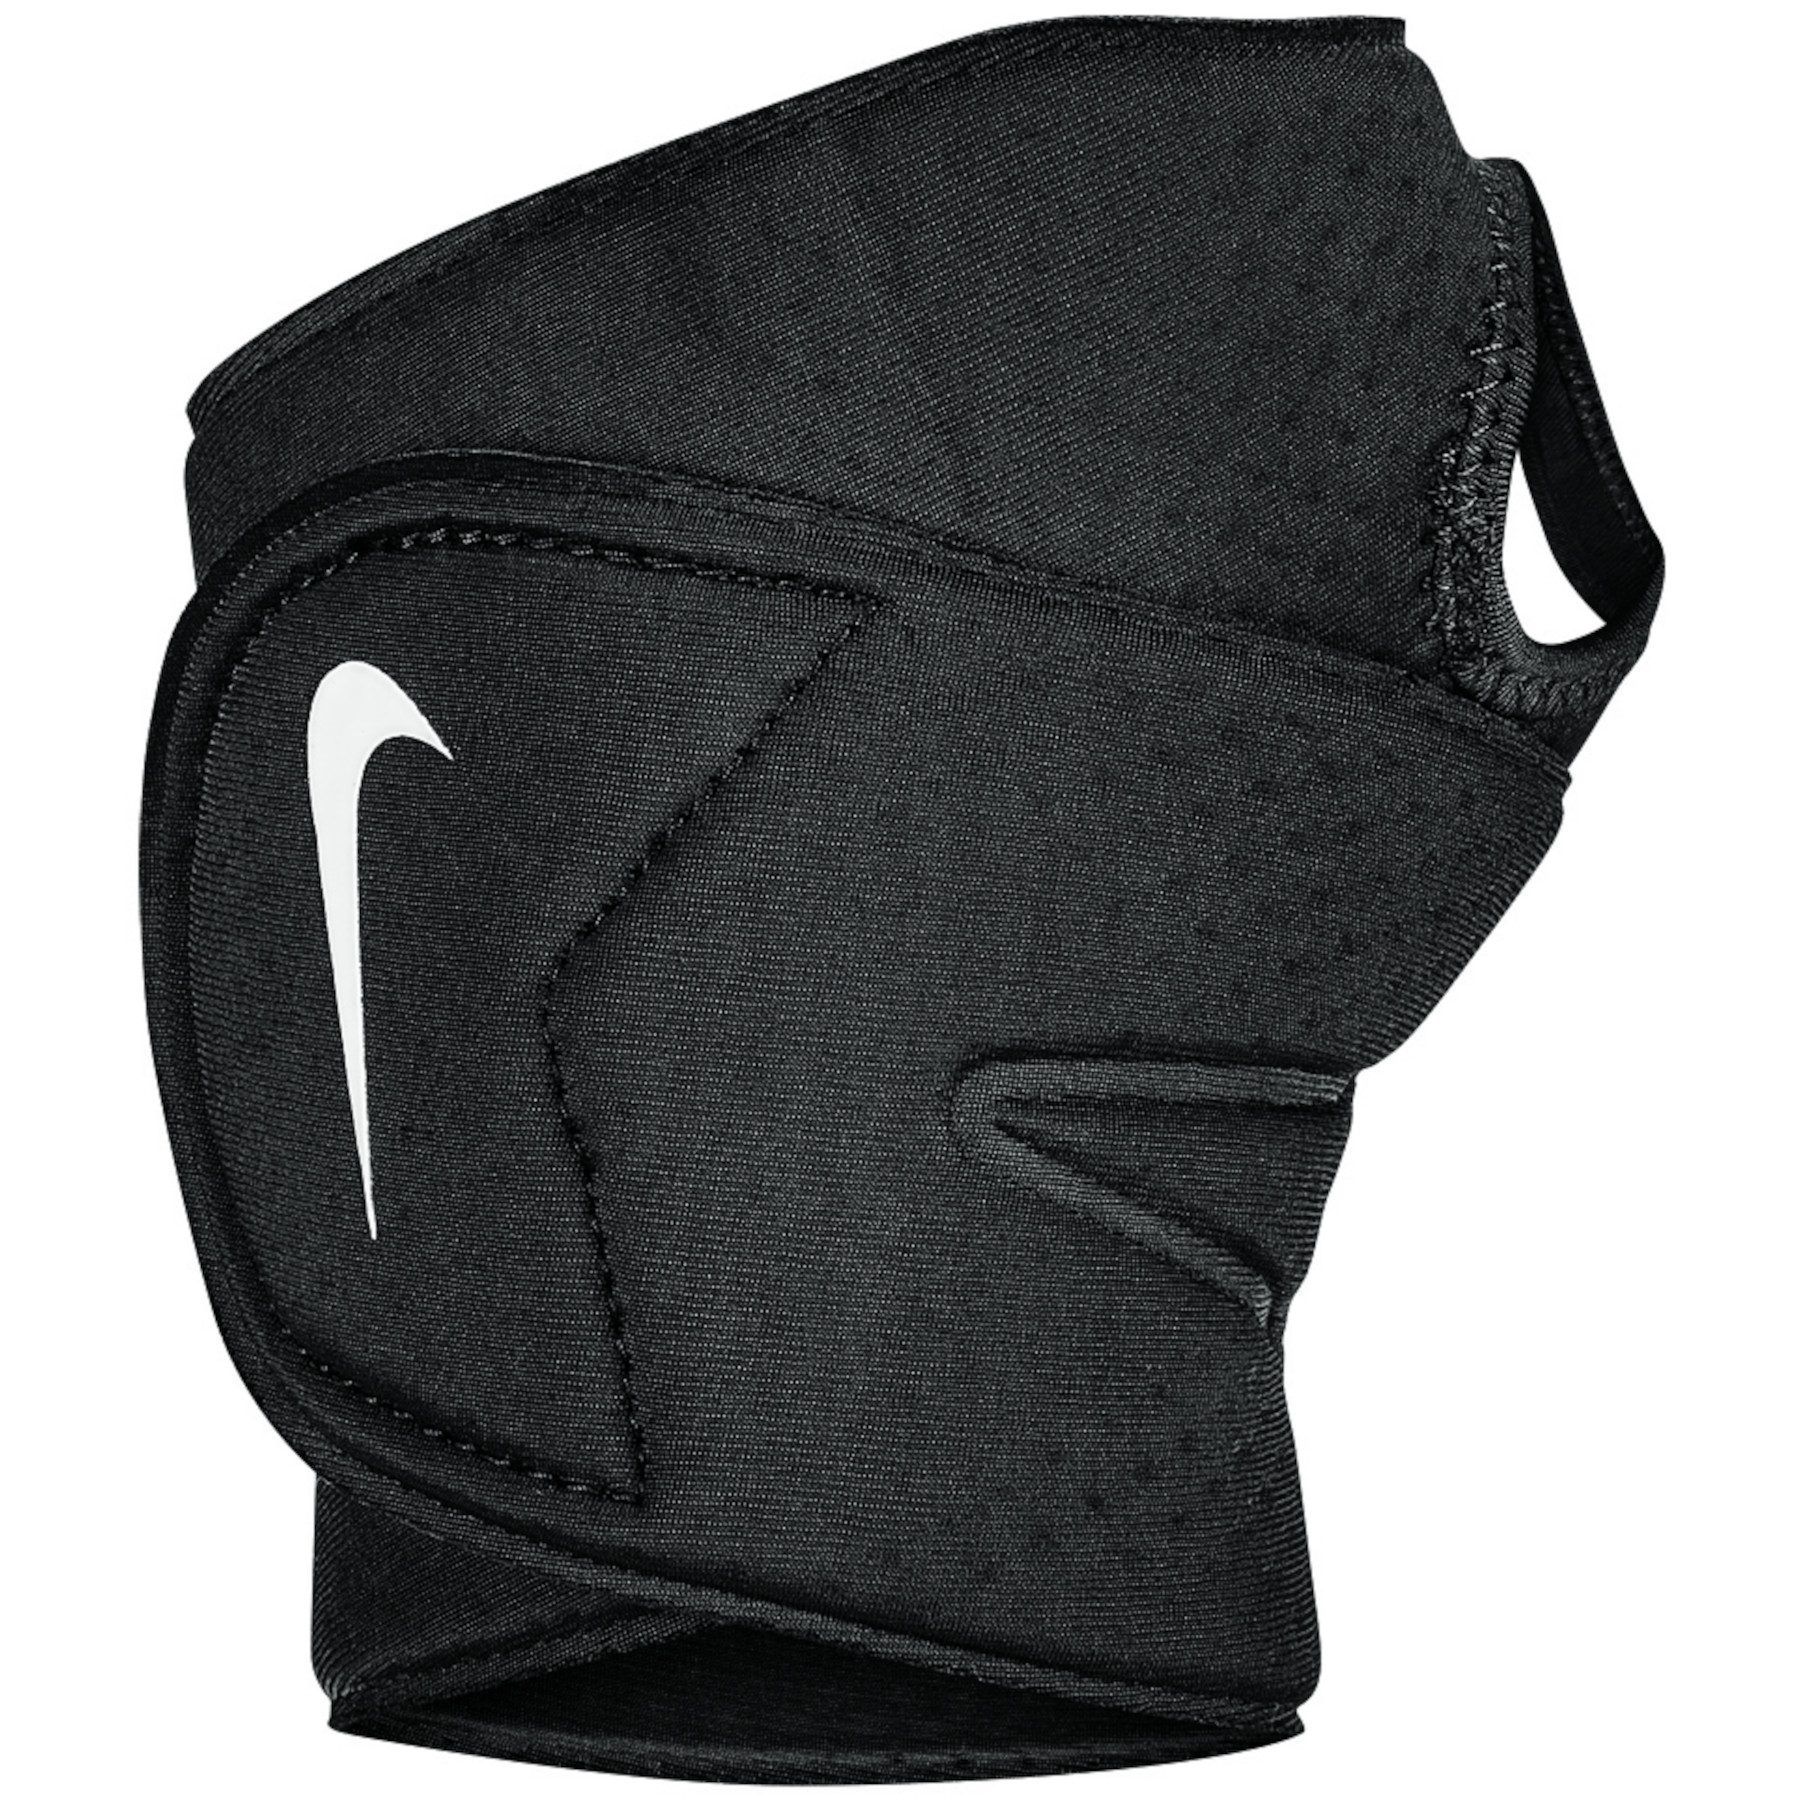 Produktbild von Nike Pro Combat Handgelenk &amp; Daumen Bandage 3.0 - black/white 010